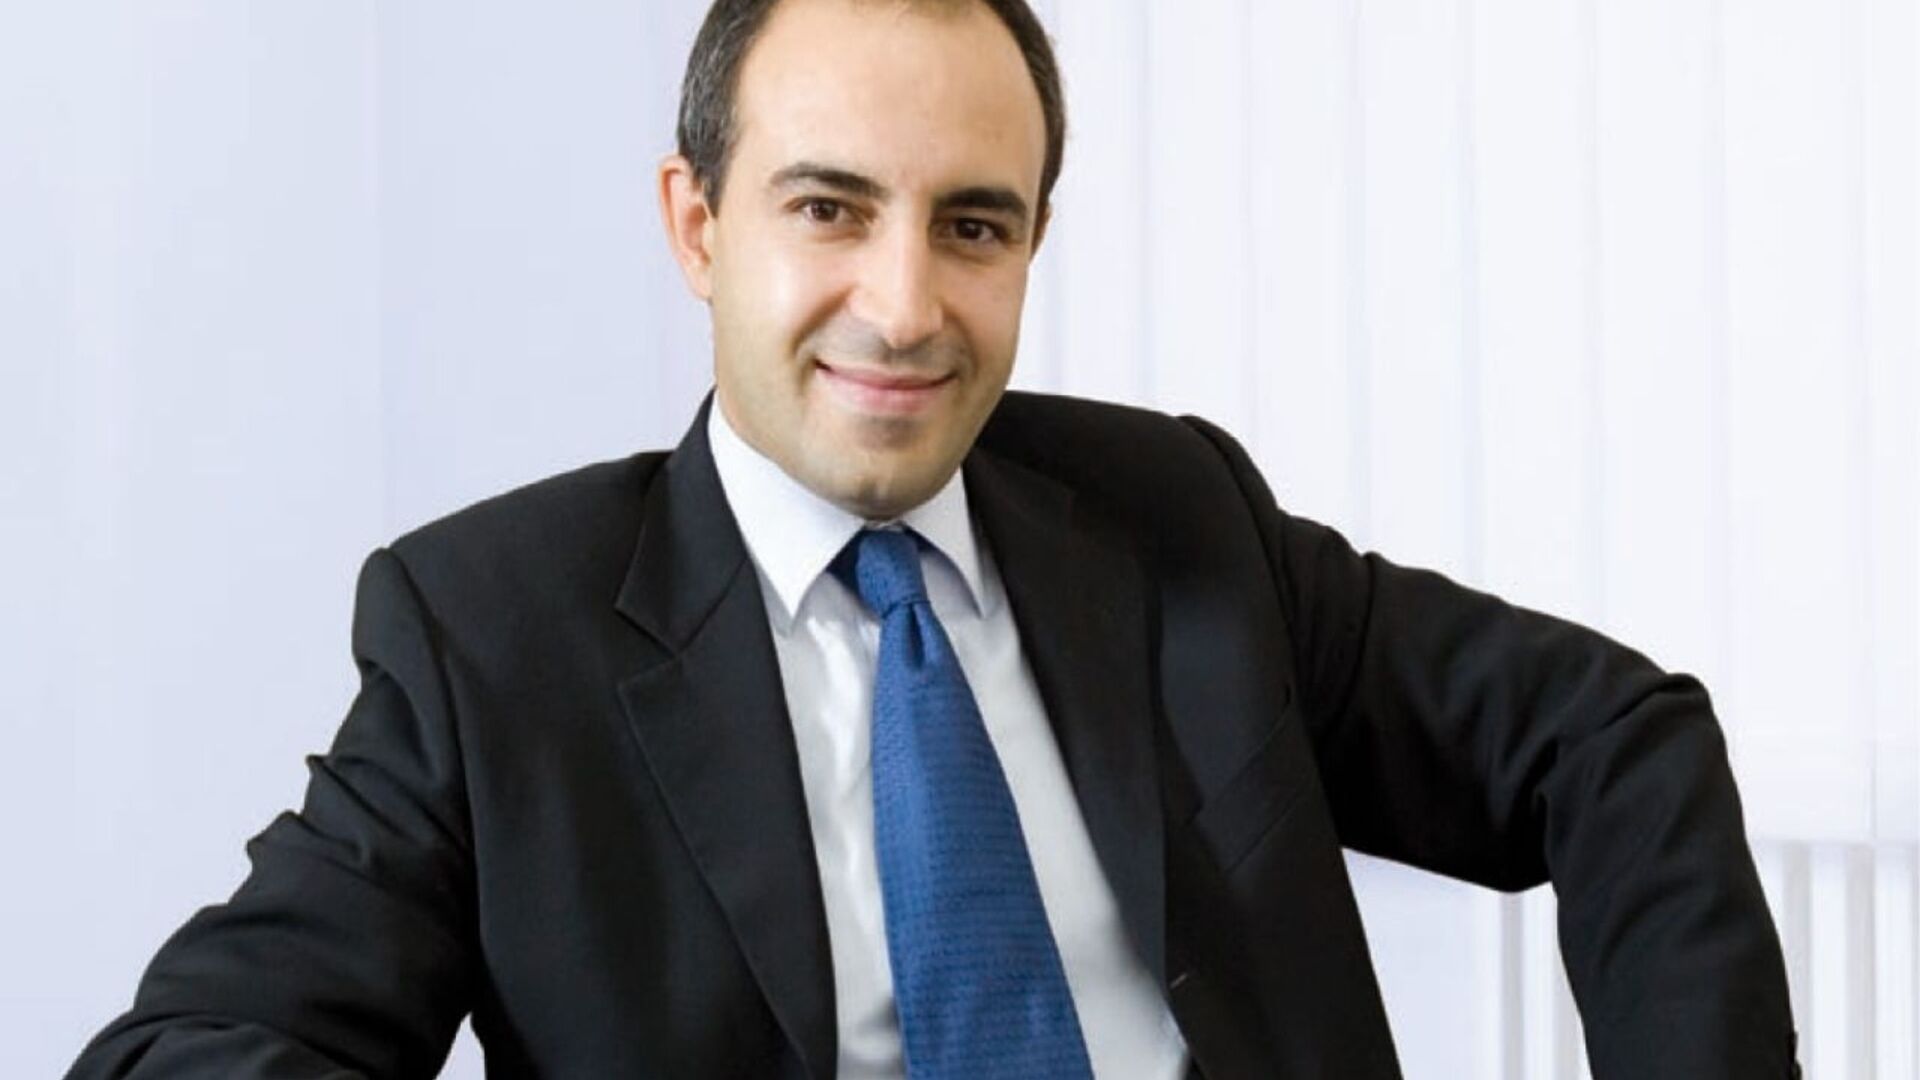 Fabio Pagano 是 SitoVivo 的首席执行官